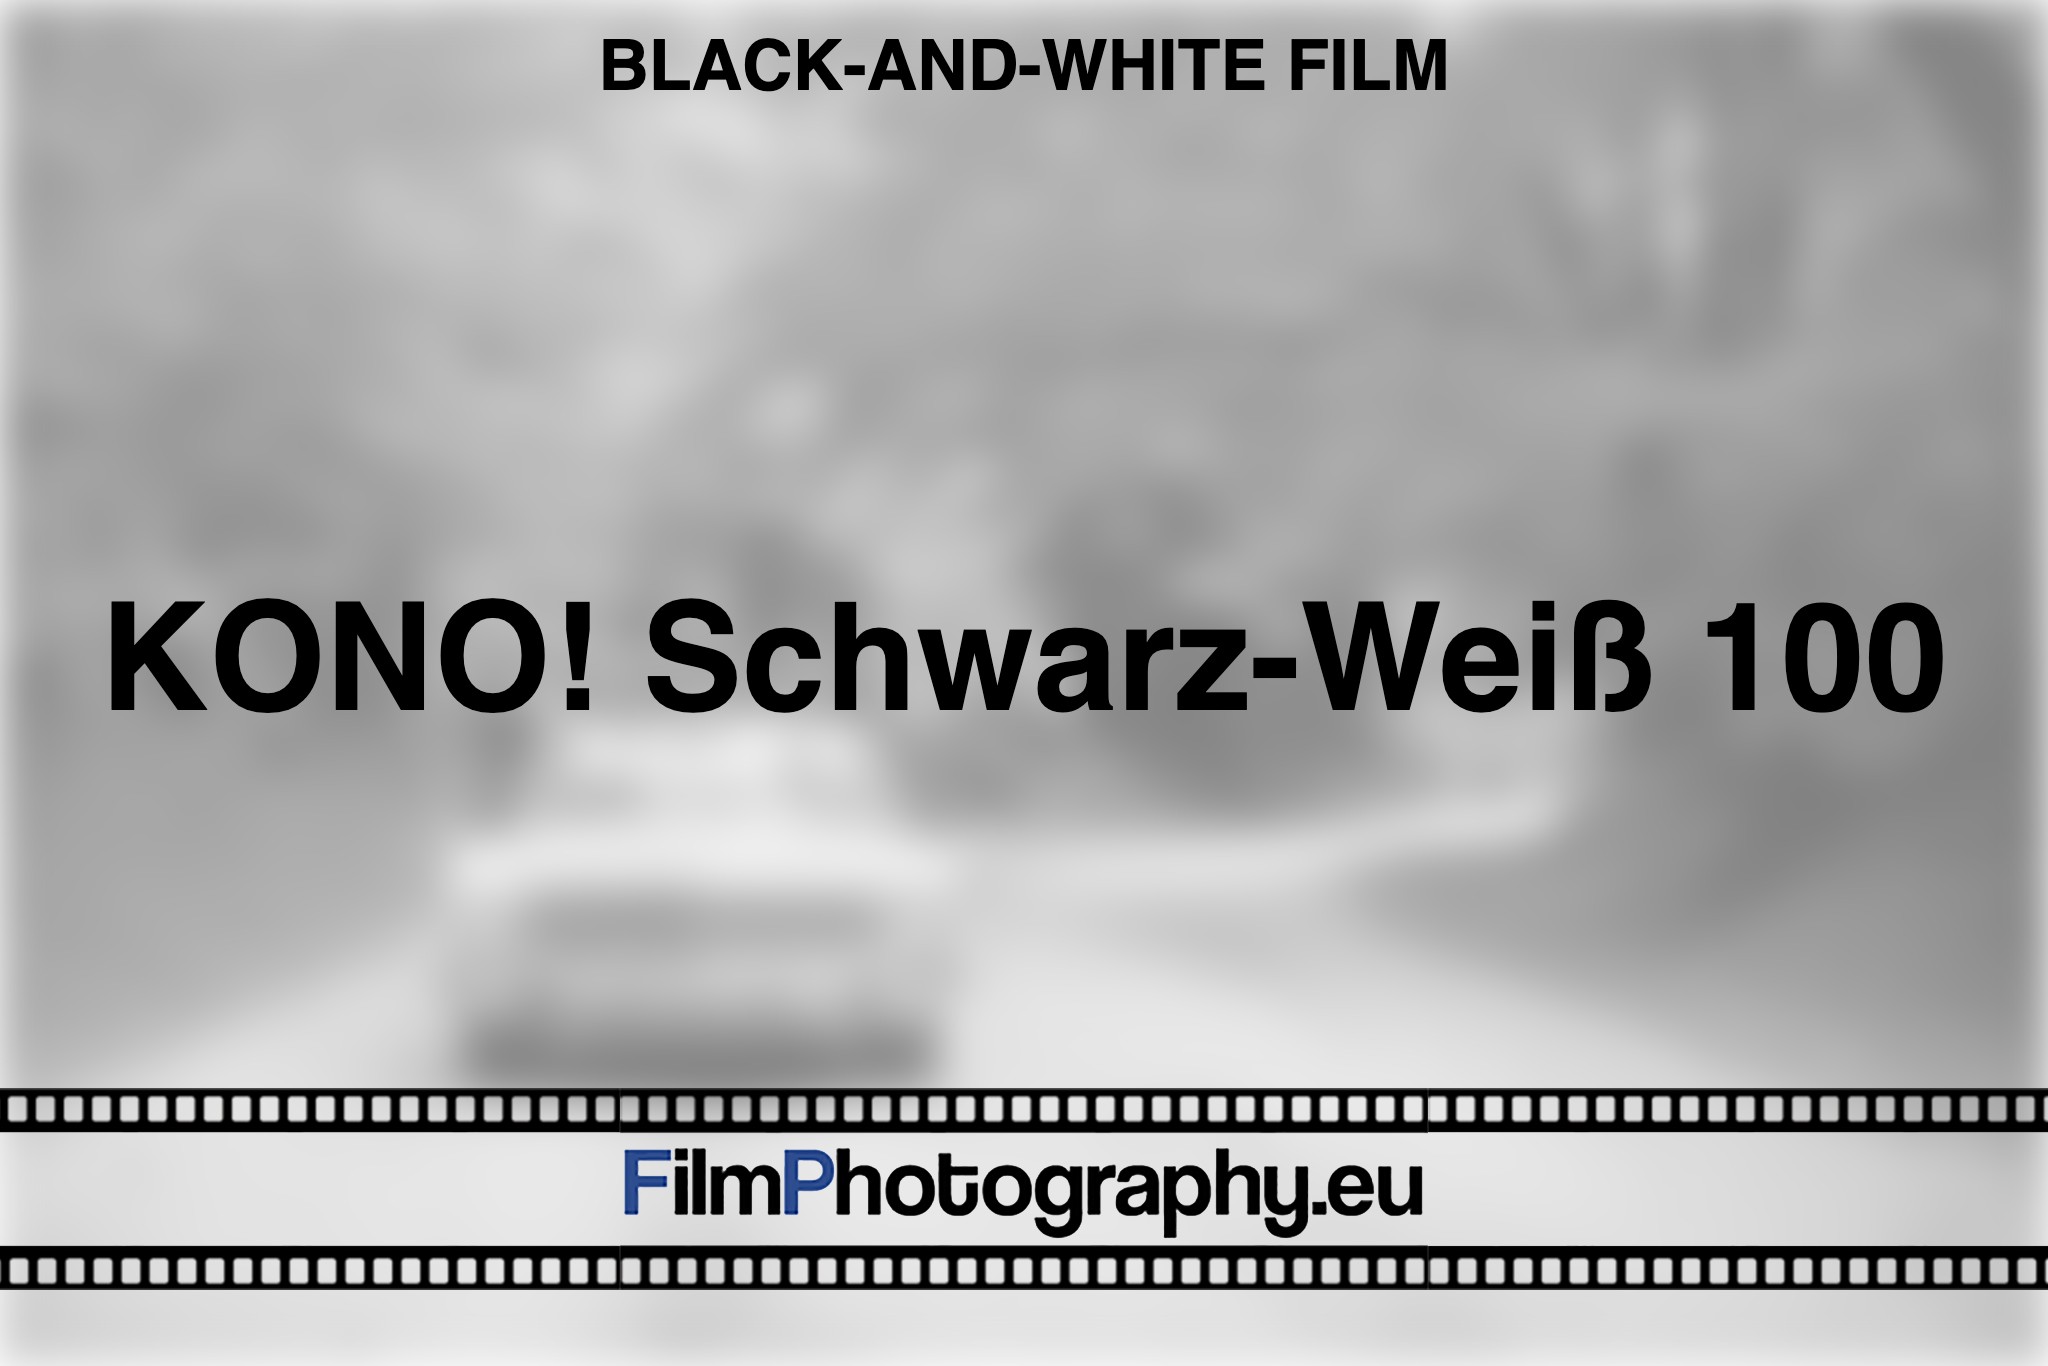 kono-schwarz-weiß-100-black-and-white-film-bnv